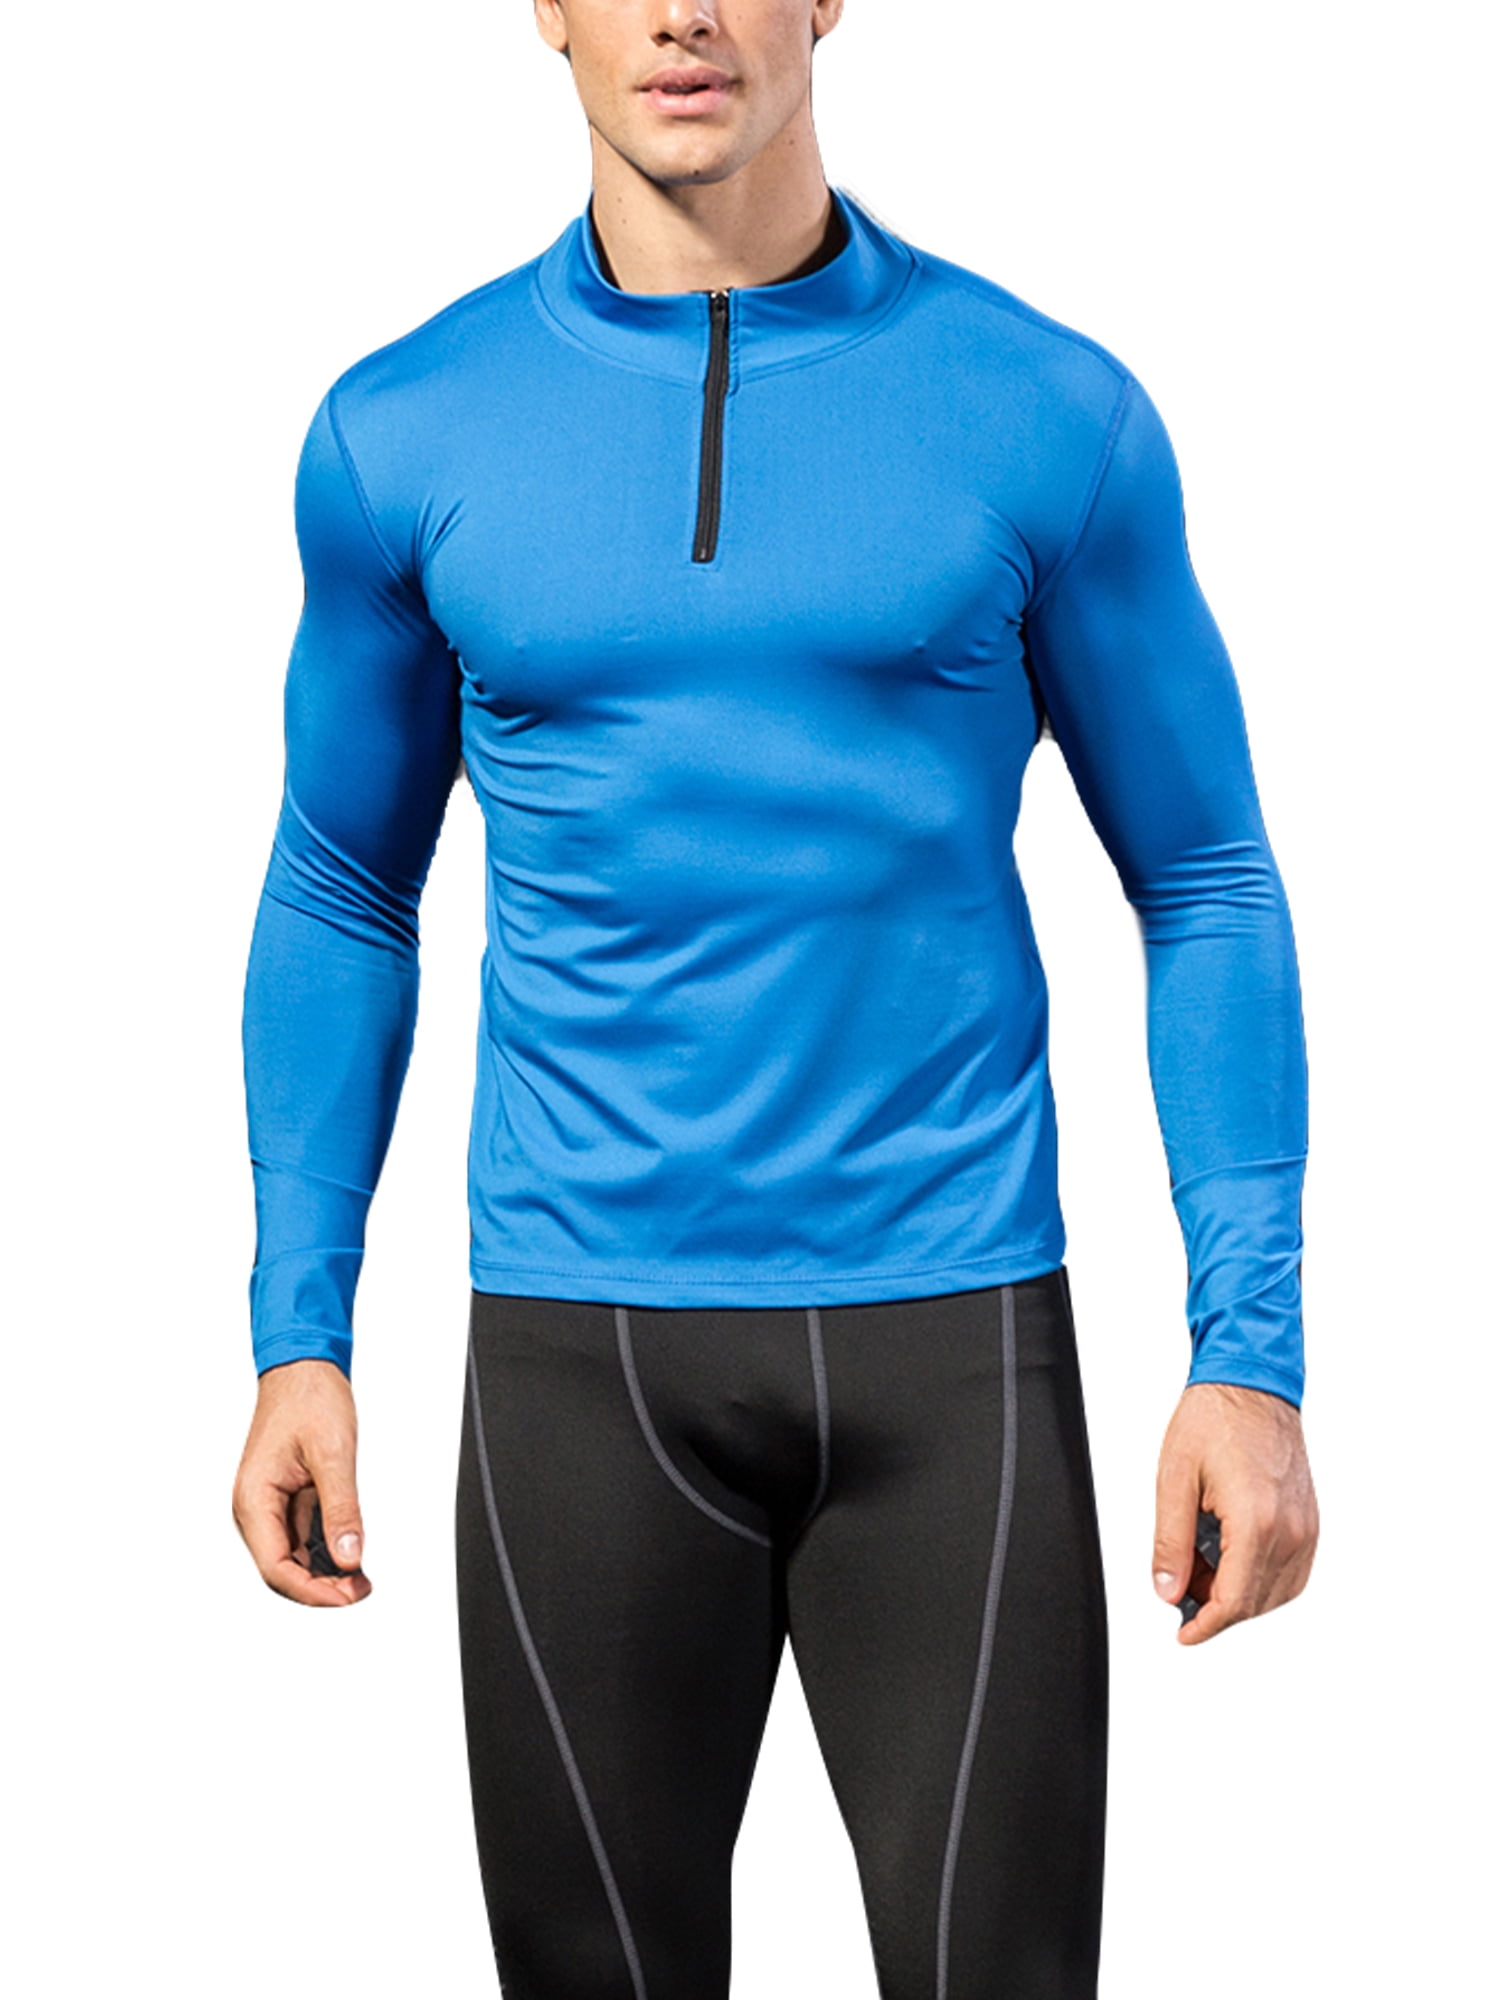 Men's Compression Top 1/4 Zip Dri fit Running Basketball Shirt Gym Base Layers 